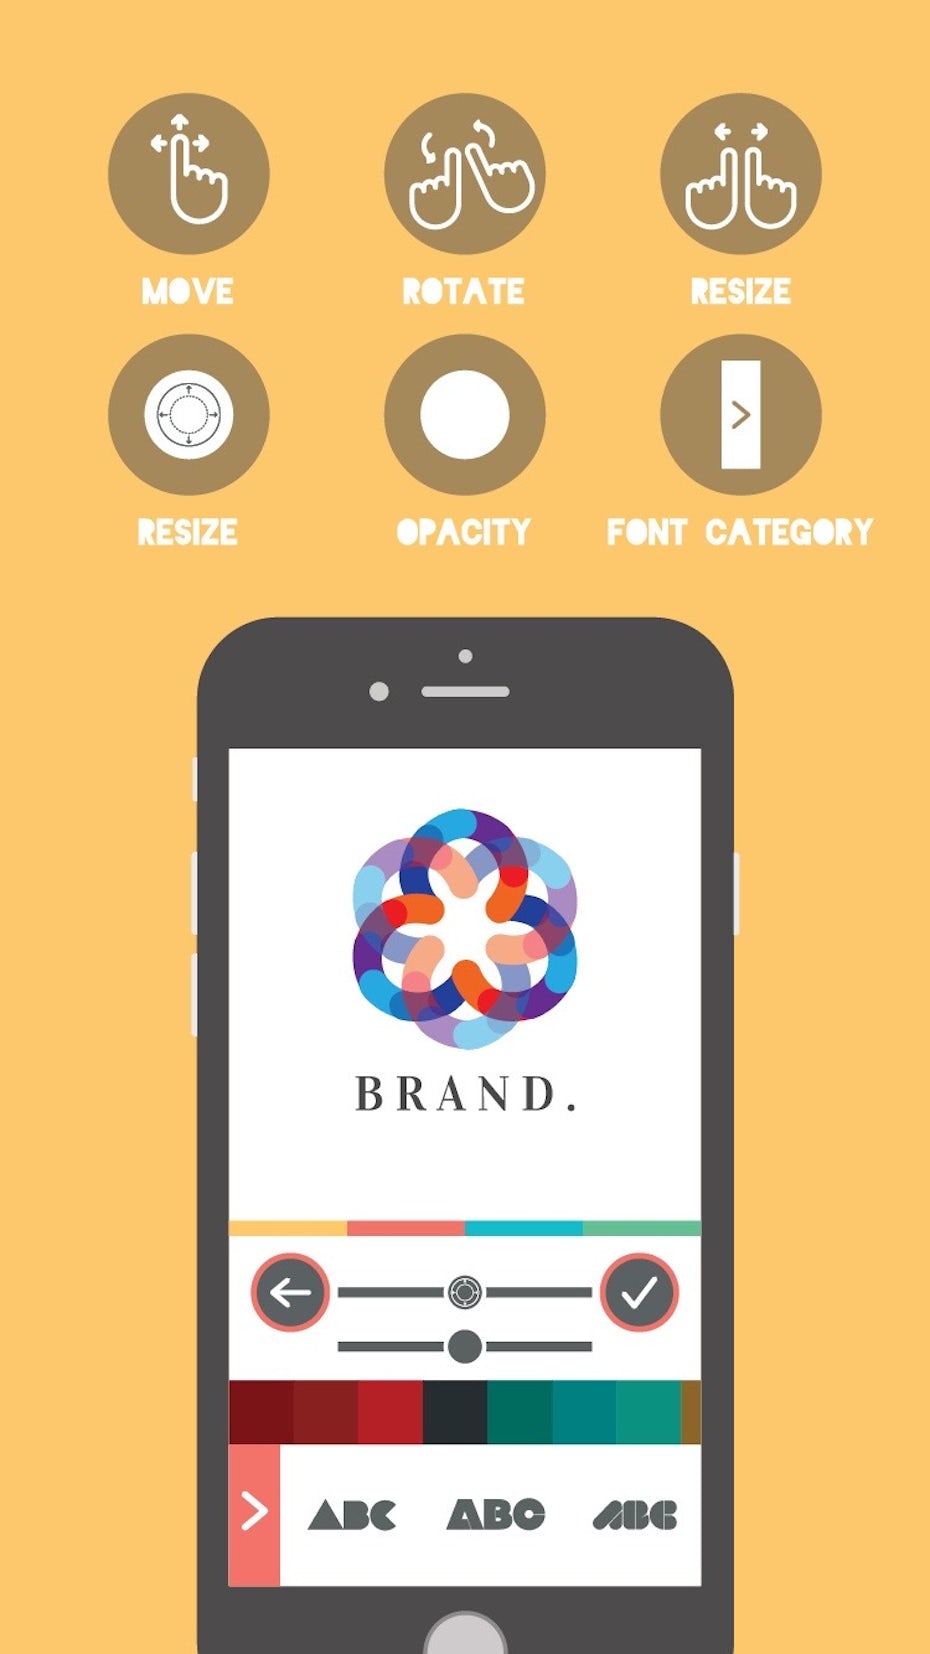 Create a great logo now in 2023  App logo, App icon design, Custom icons